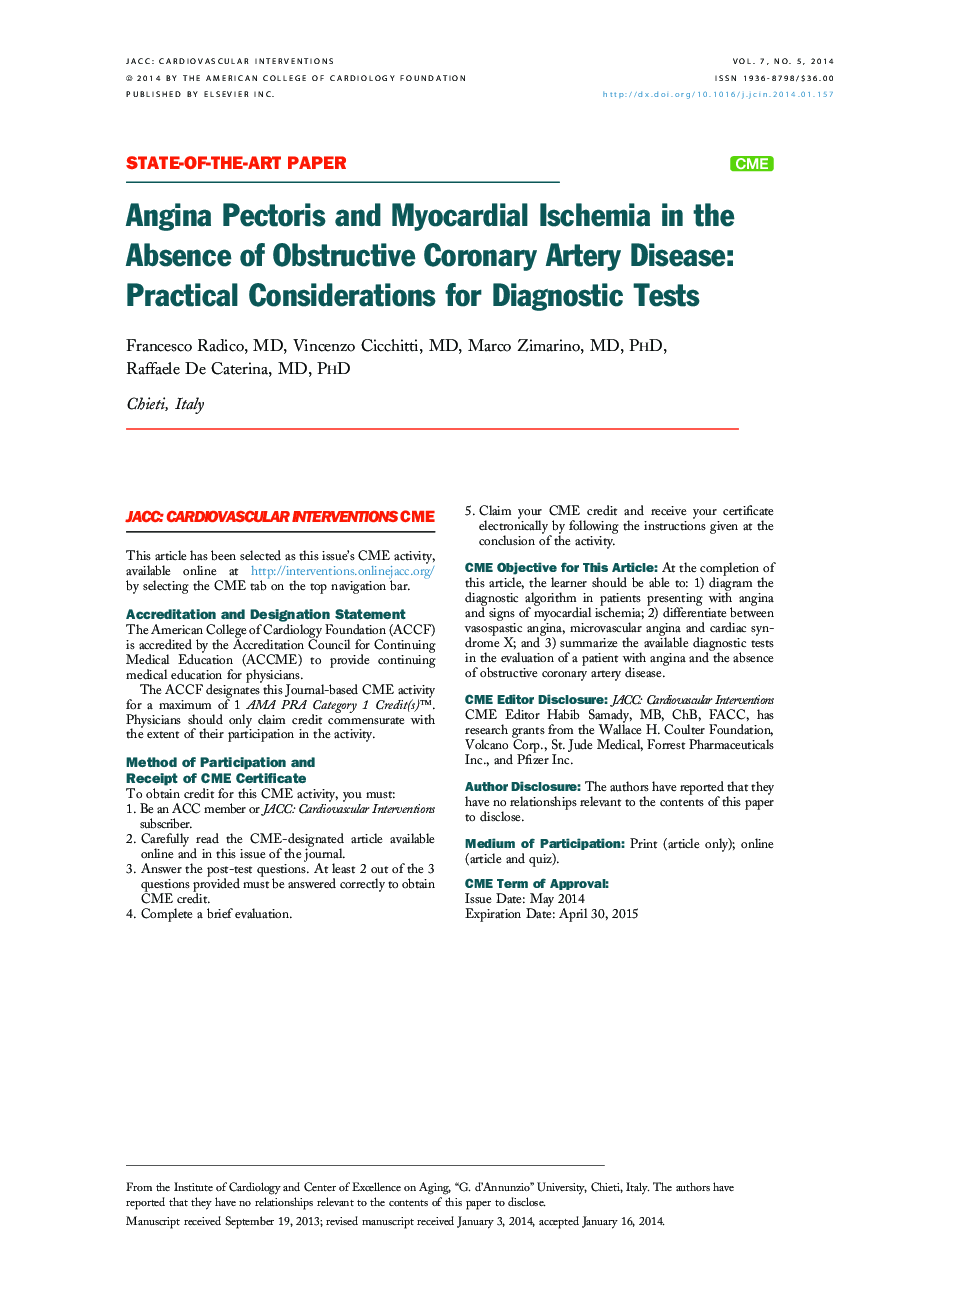 Angina Pectoris and Myocardial Ischemia in the Absence ofÂ Obstructive CoronaryÂ ArteryÂ Disease: Practical Considerations forÂ DiagnosticÂ Tests